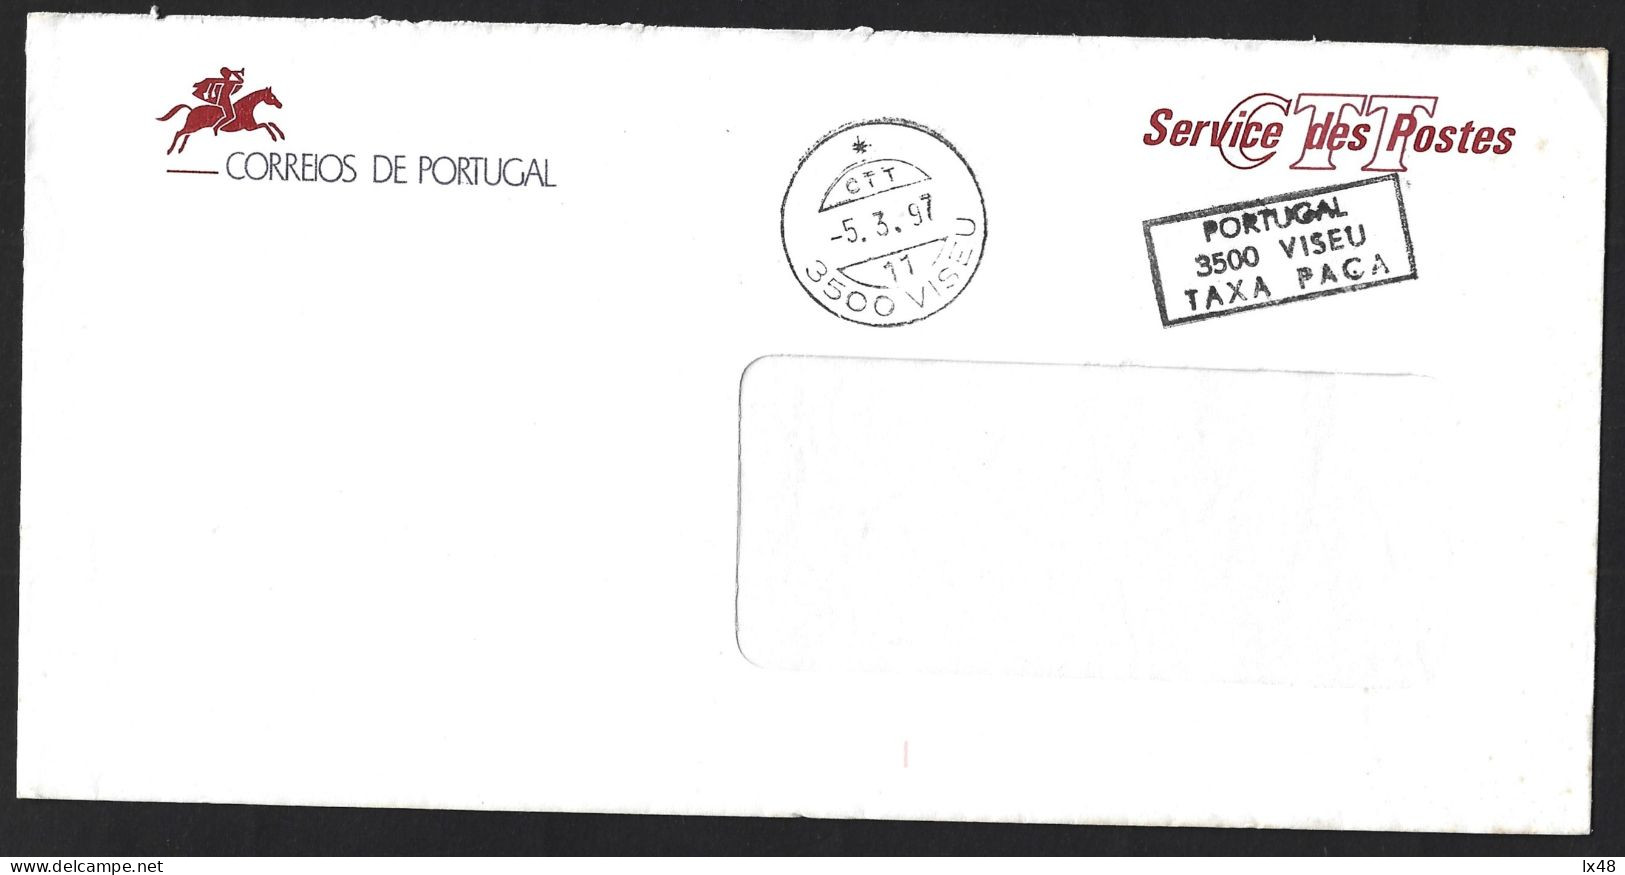 Carta Dos Correios Com Marcas De 'Taxa Paga, Viseu'. Rare. Letter From The Post Office Marked 'Tax Paid, Viseu'. Rare. - Covers & Documents